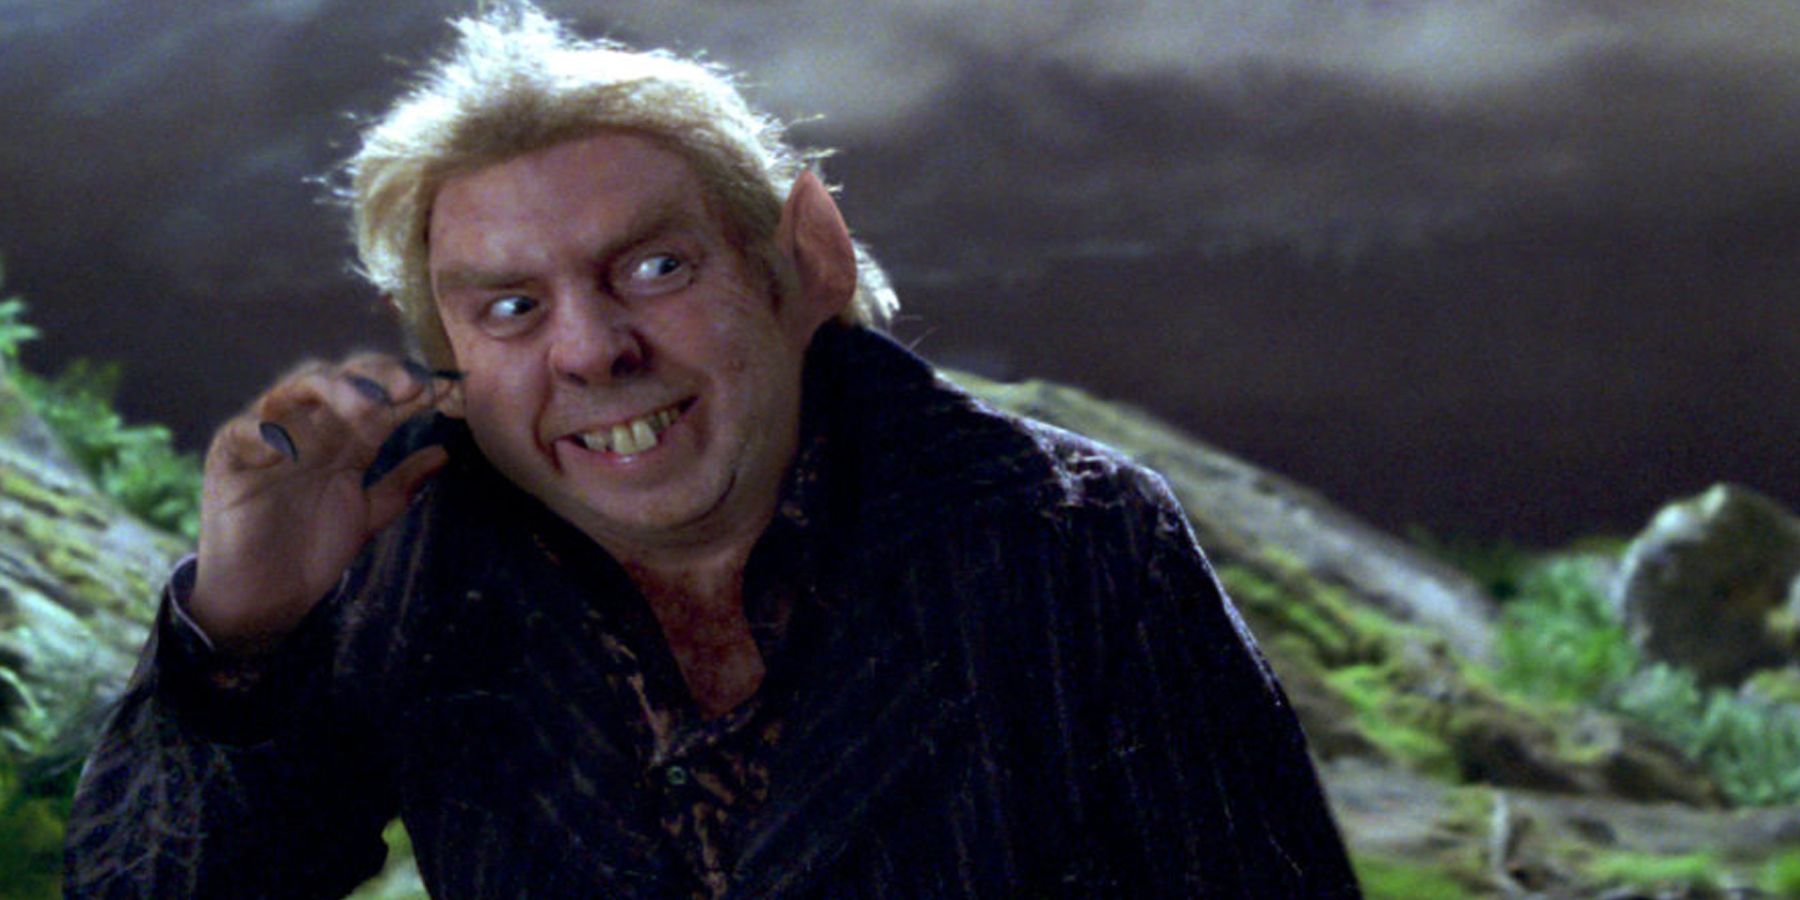 Peter Pettigrew in Prisoner of Azkaban